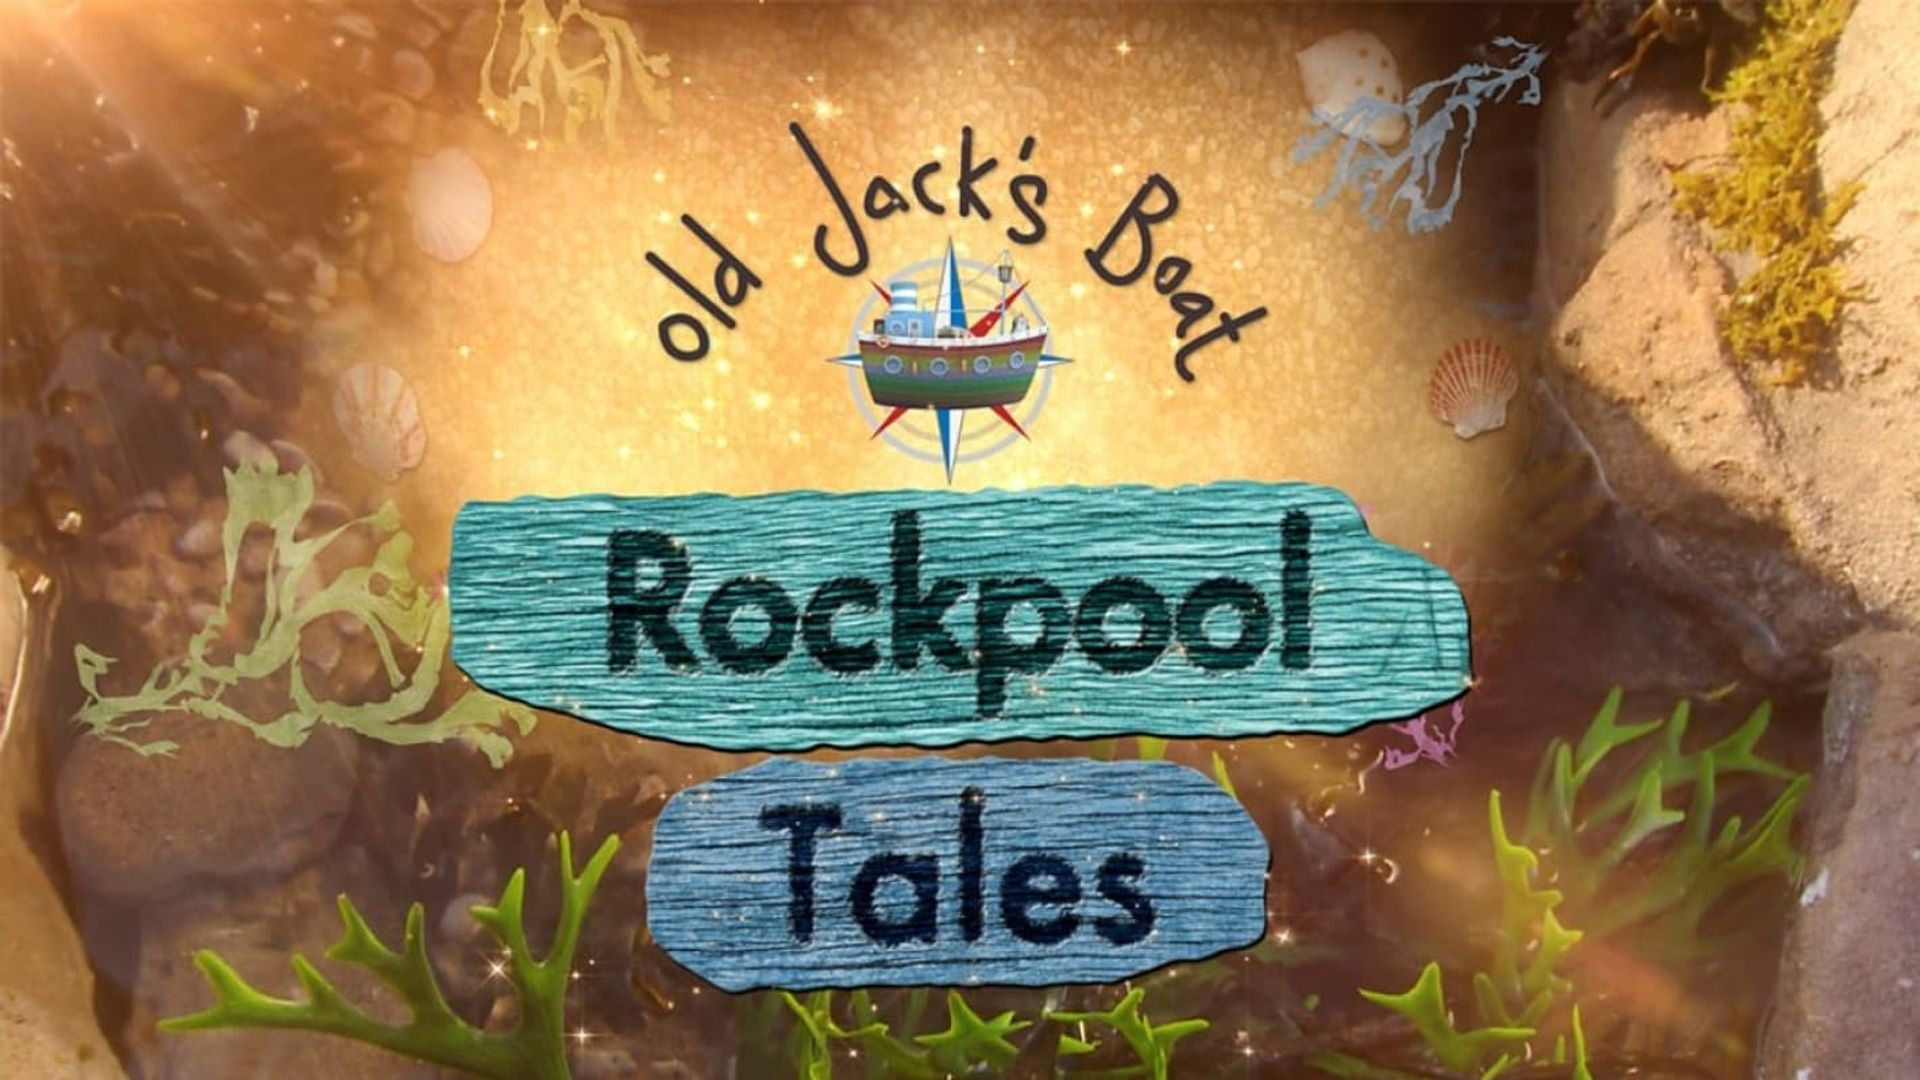 Old Jack's Boat: Rockpool Tales background